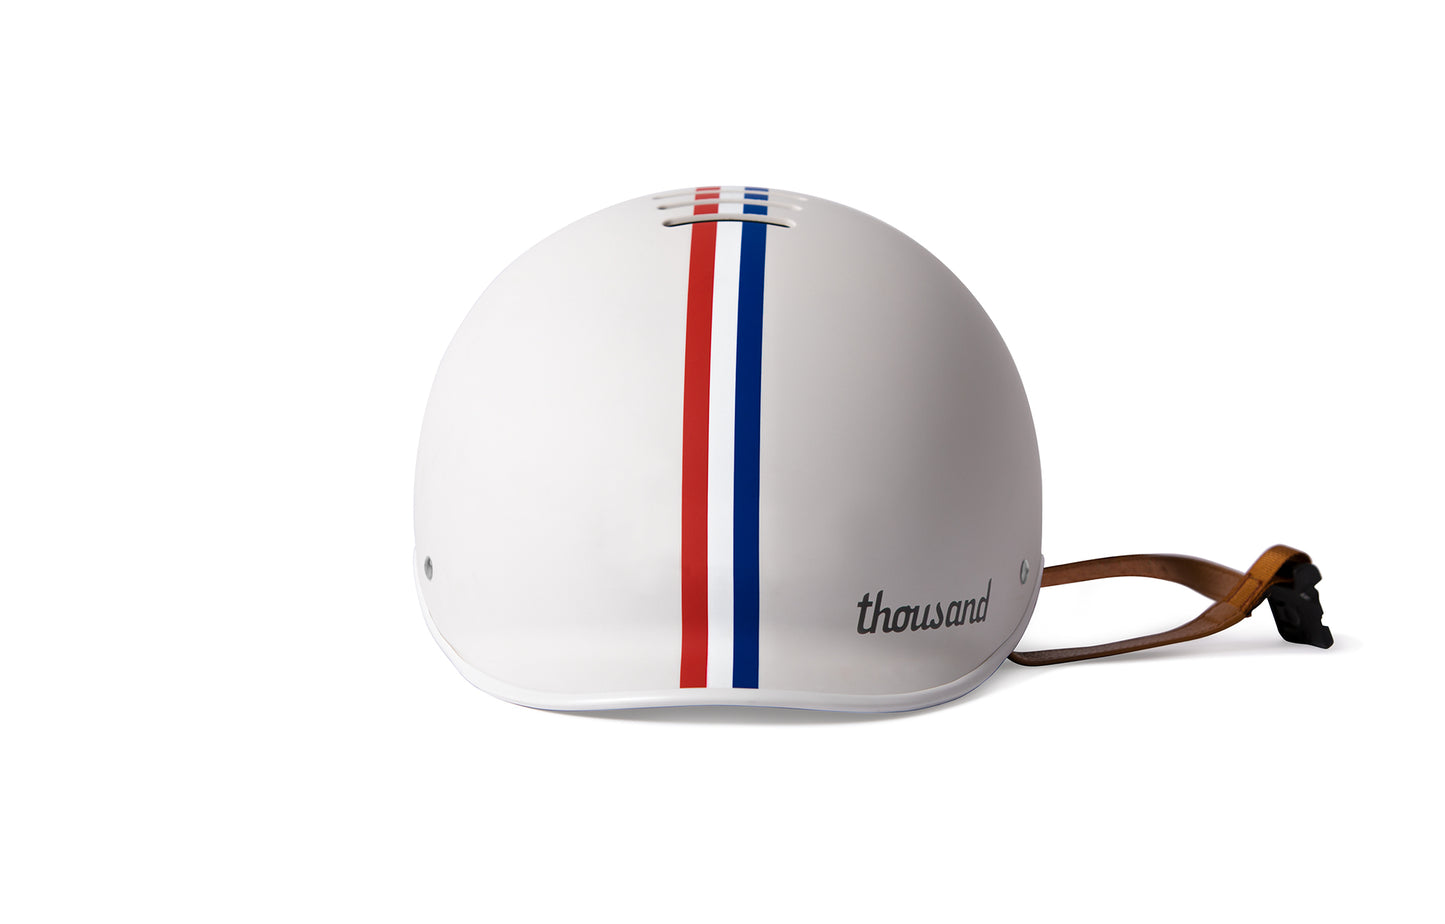 Thousand Helmet Heritage Collection - SPEEDWAY CREME